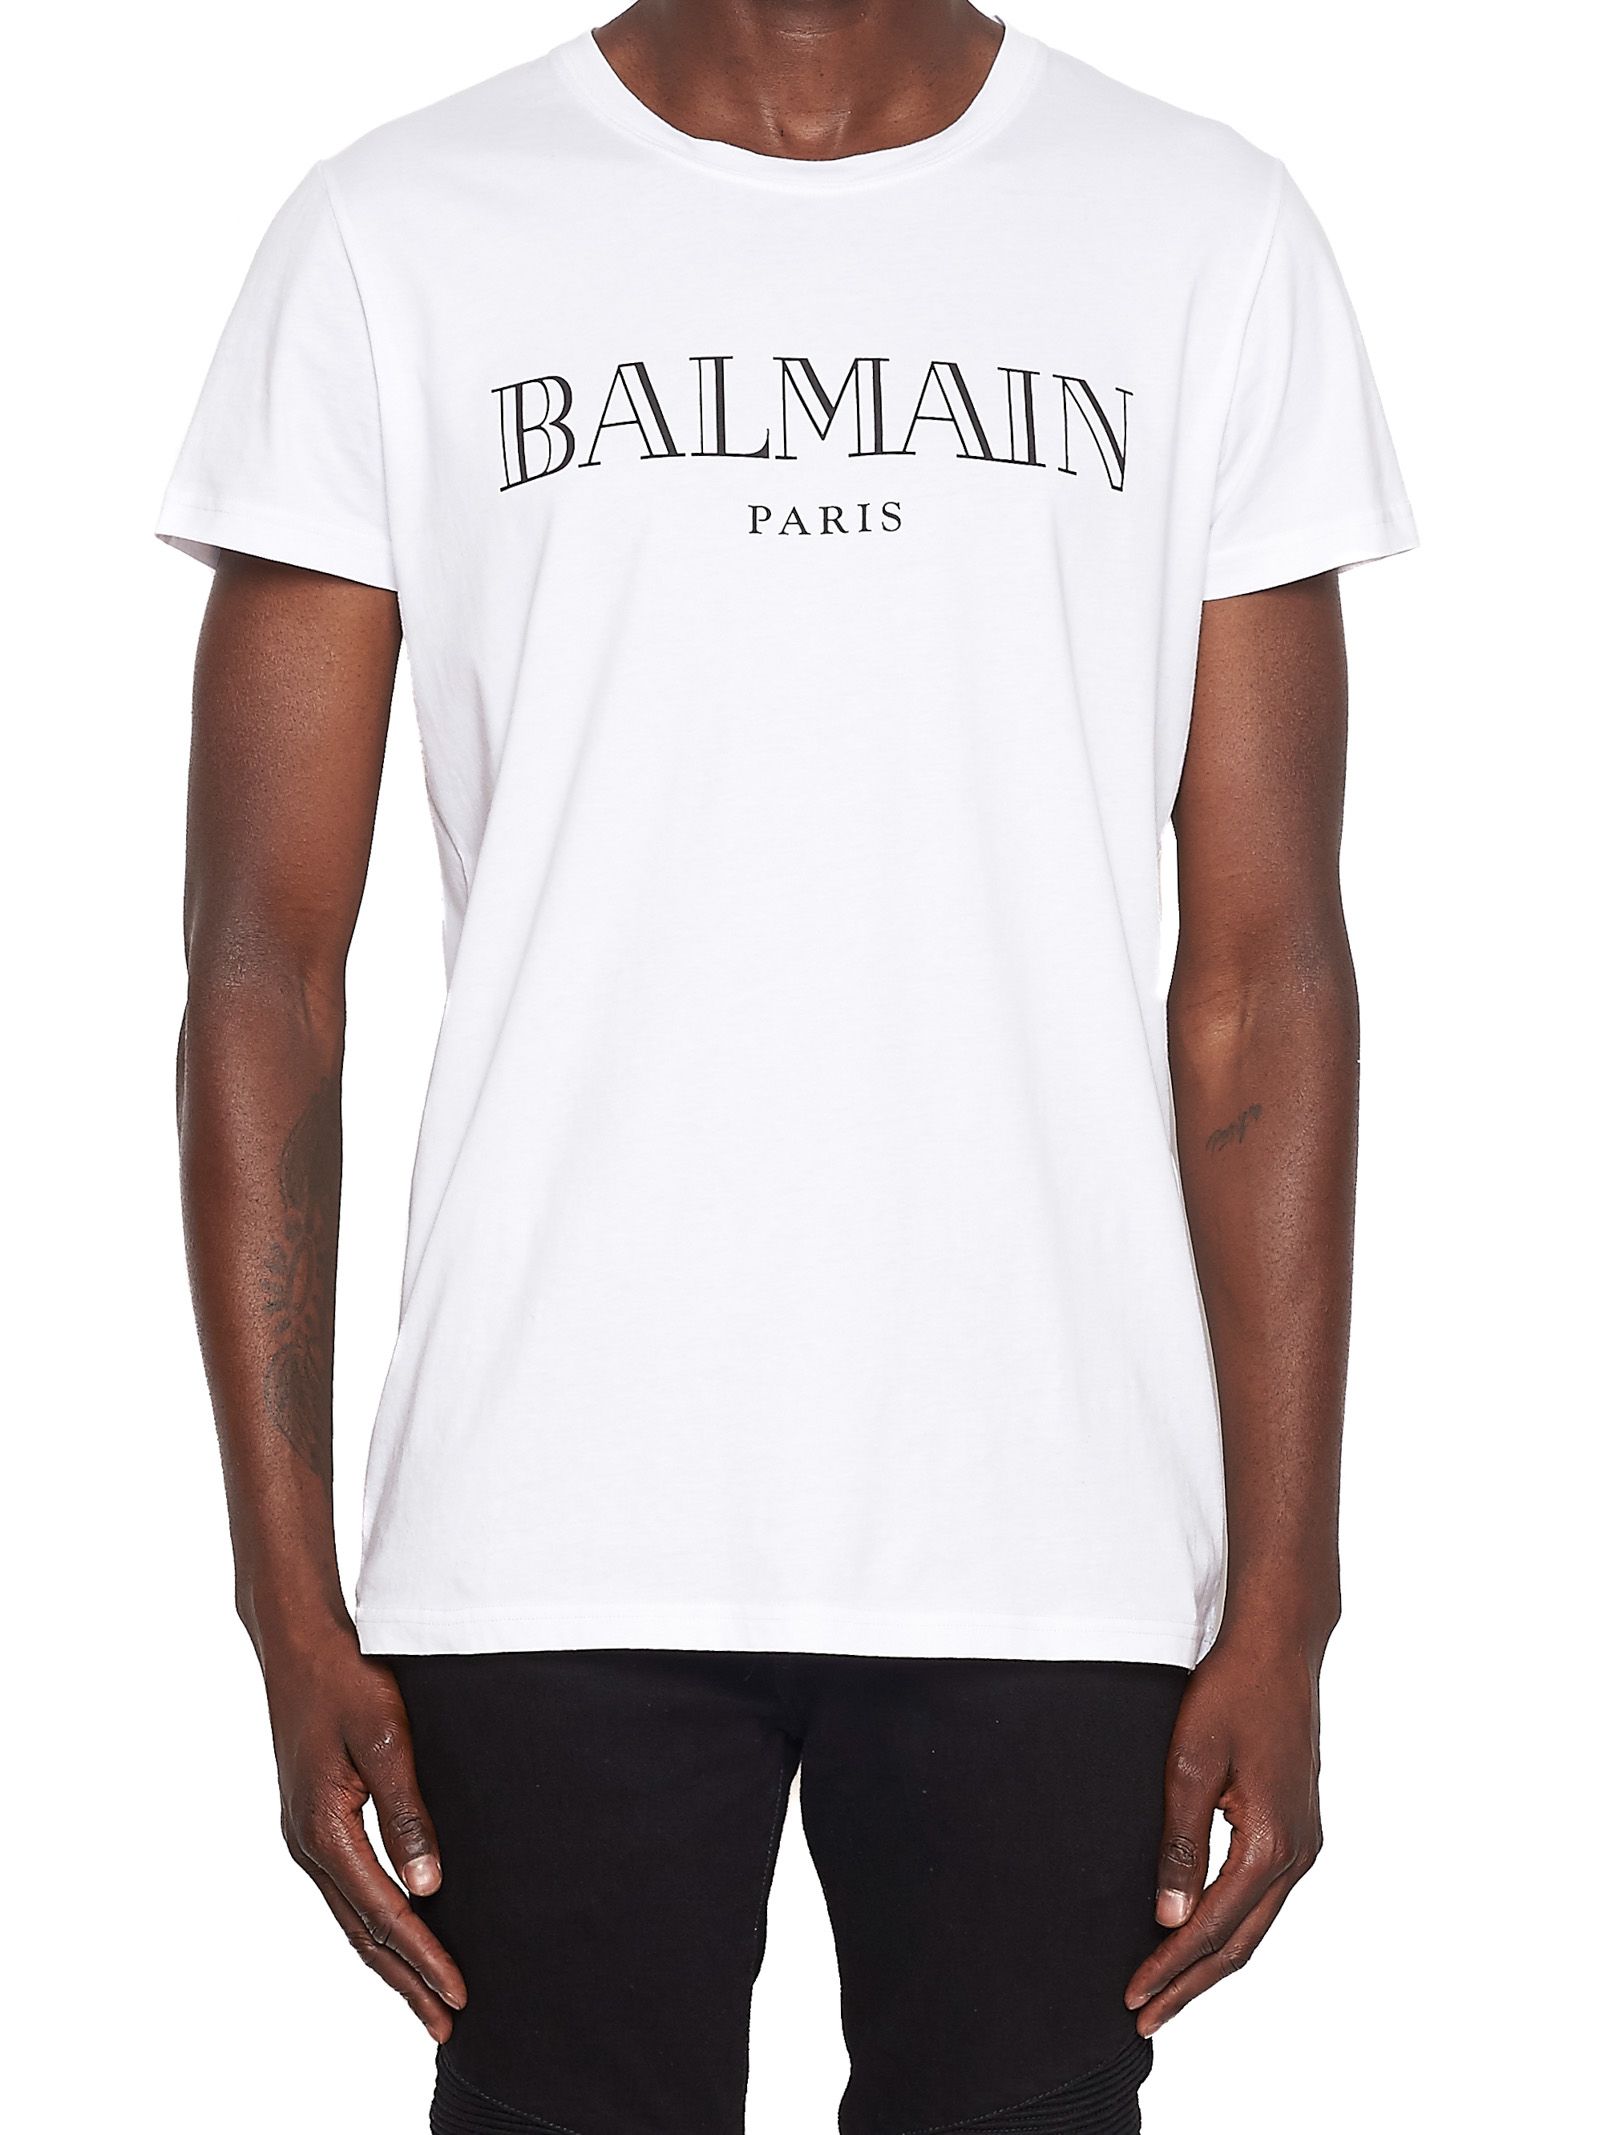 Balmain T-Shirt, White | ModeSens